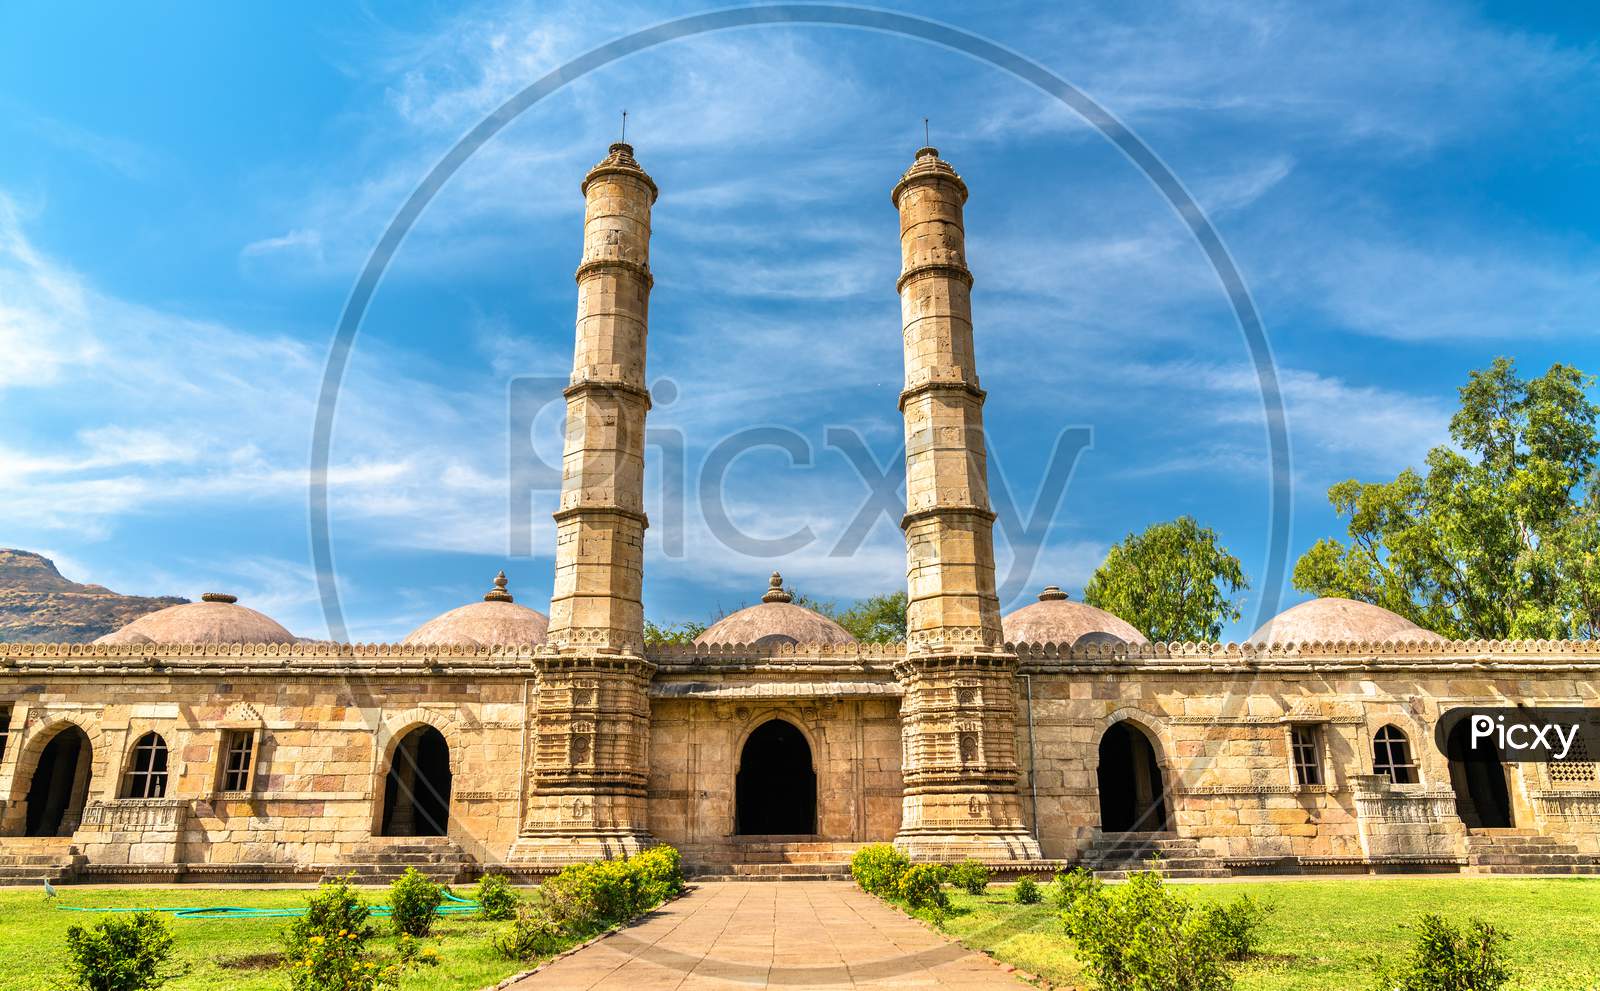 Sahar Ki Masjid At Champaner-Pavagadh Archaeological Park. A Unesco Heritage Site In Gujarat, India